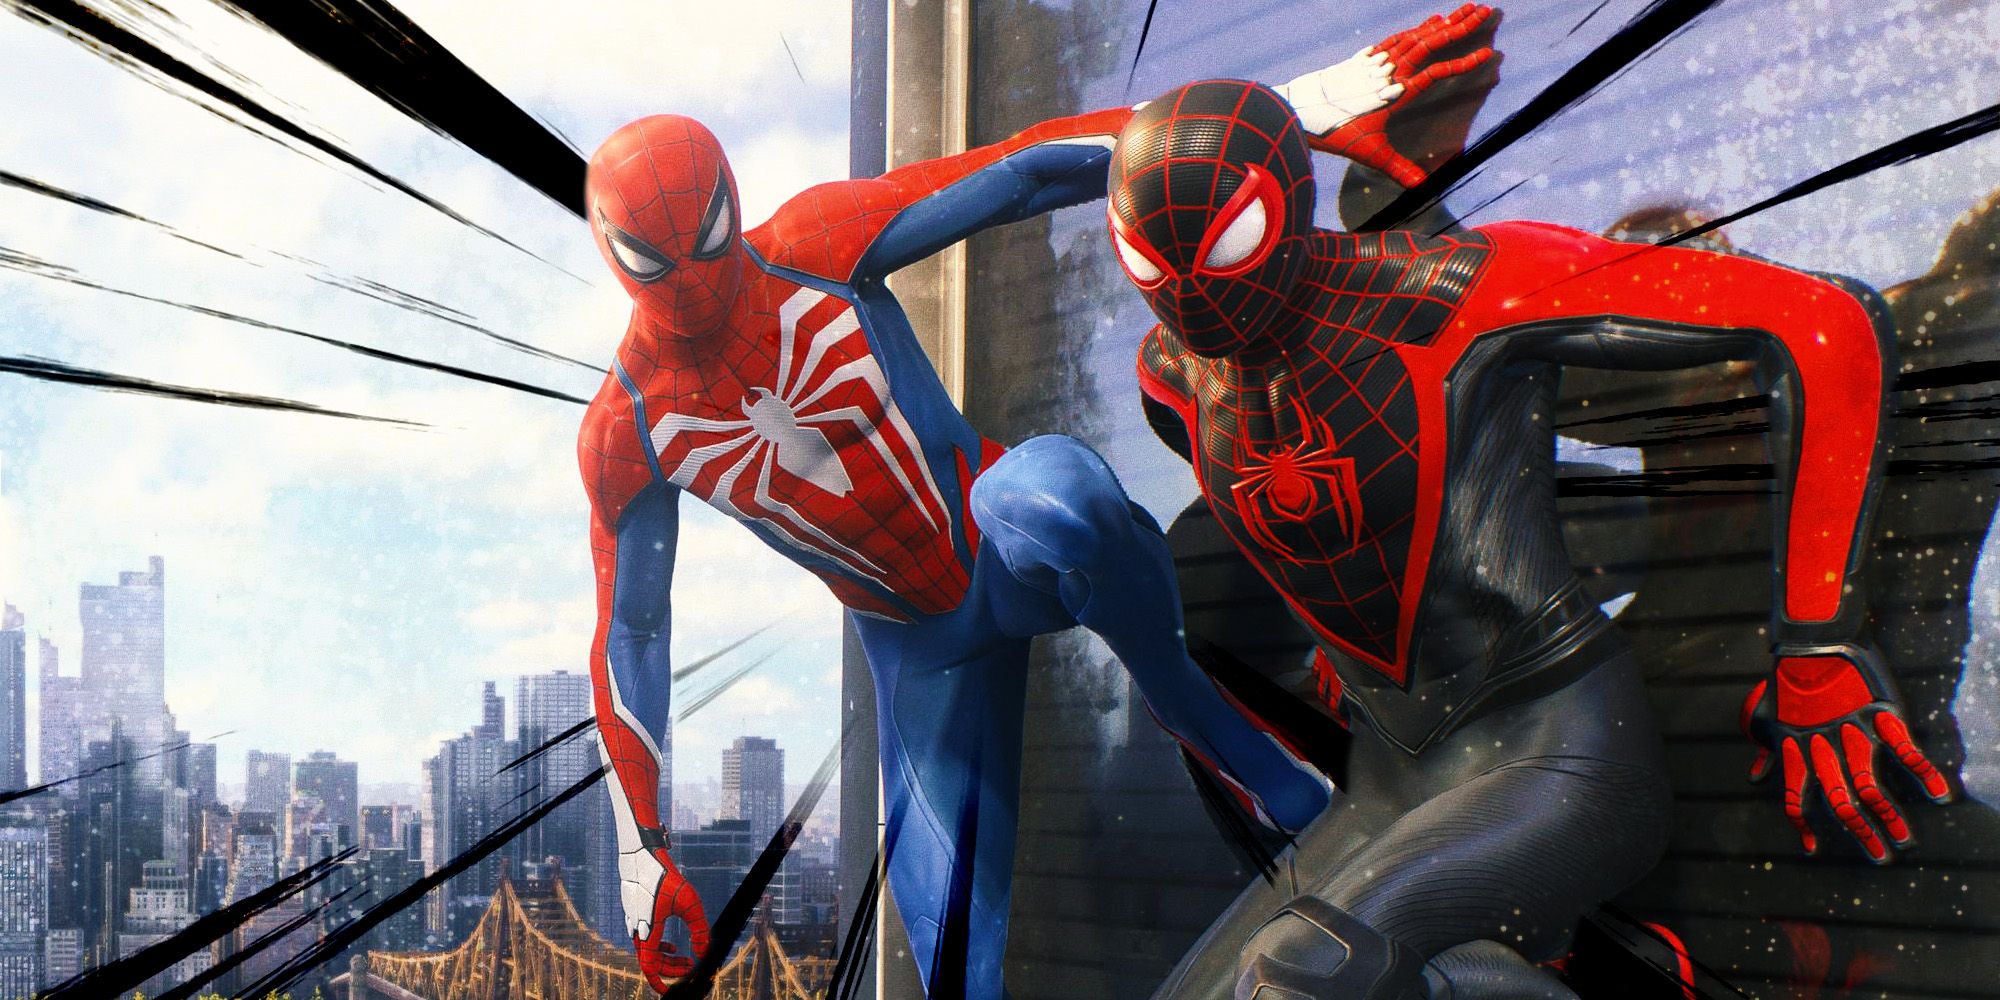 The Art of Spider-Man Exhibit NYC – LesDudis